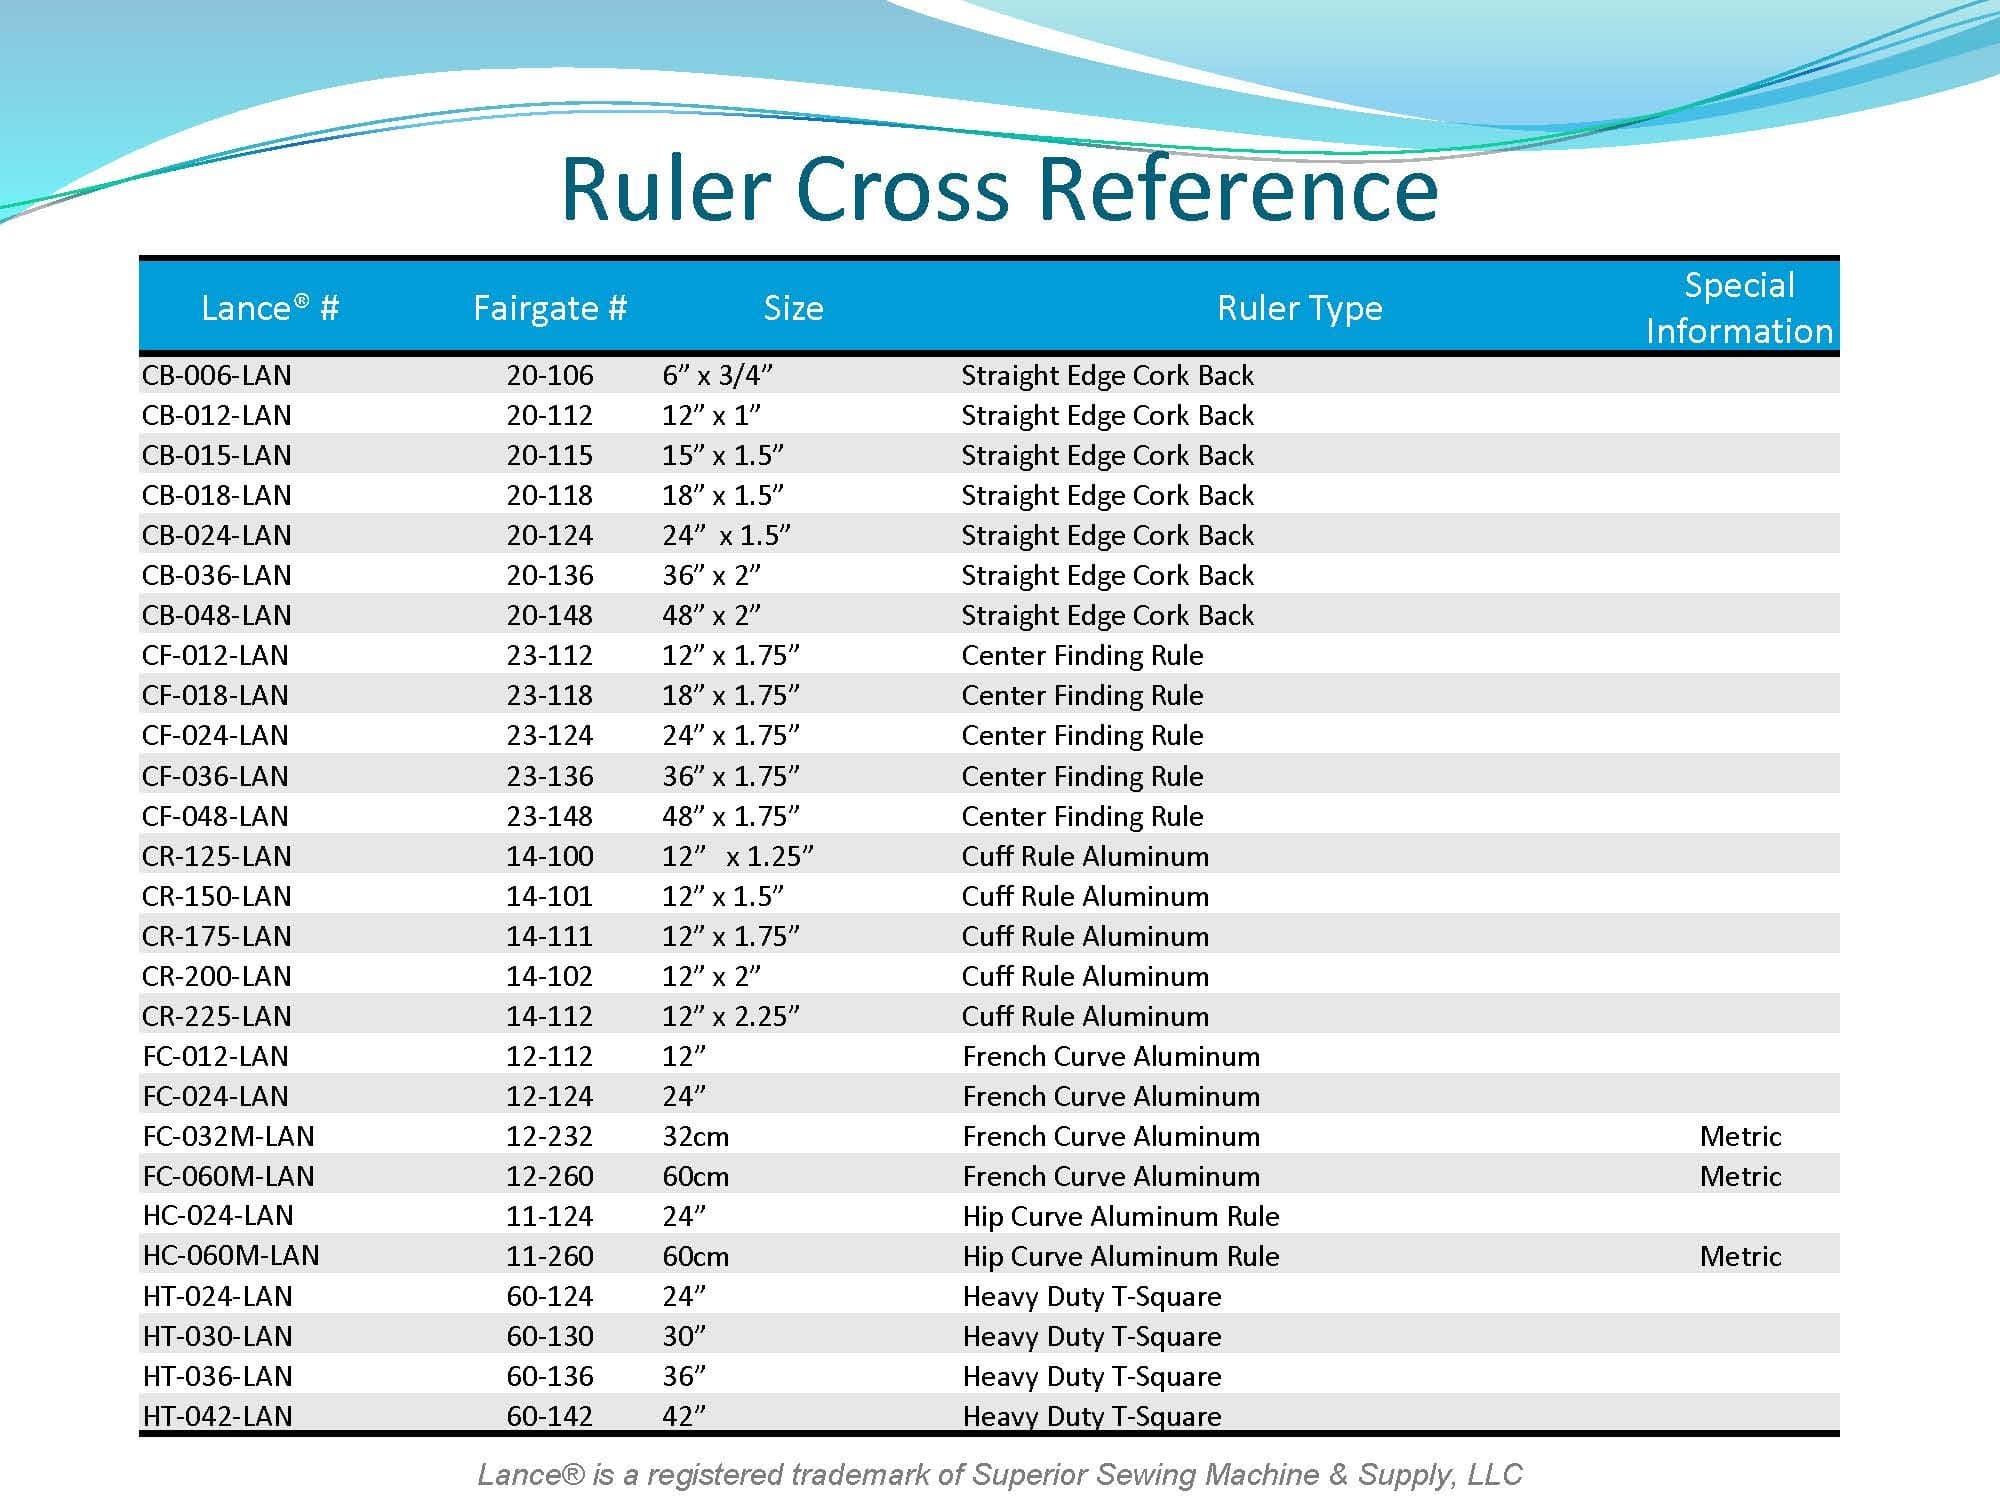 LANCE RULER CROSS REFERENCE
FAIRGATE # to LANCE #
COMPLETE LANCE RULER LIST